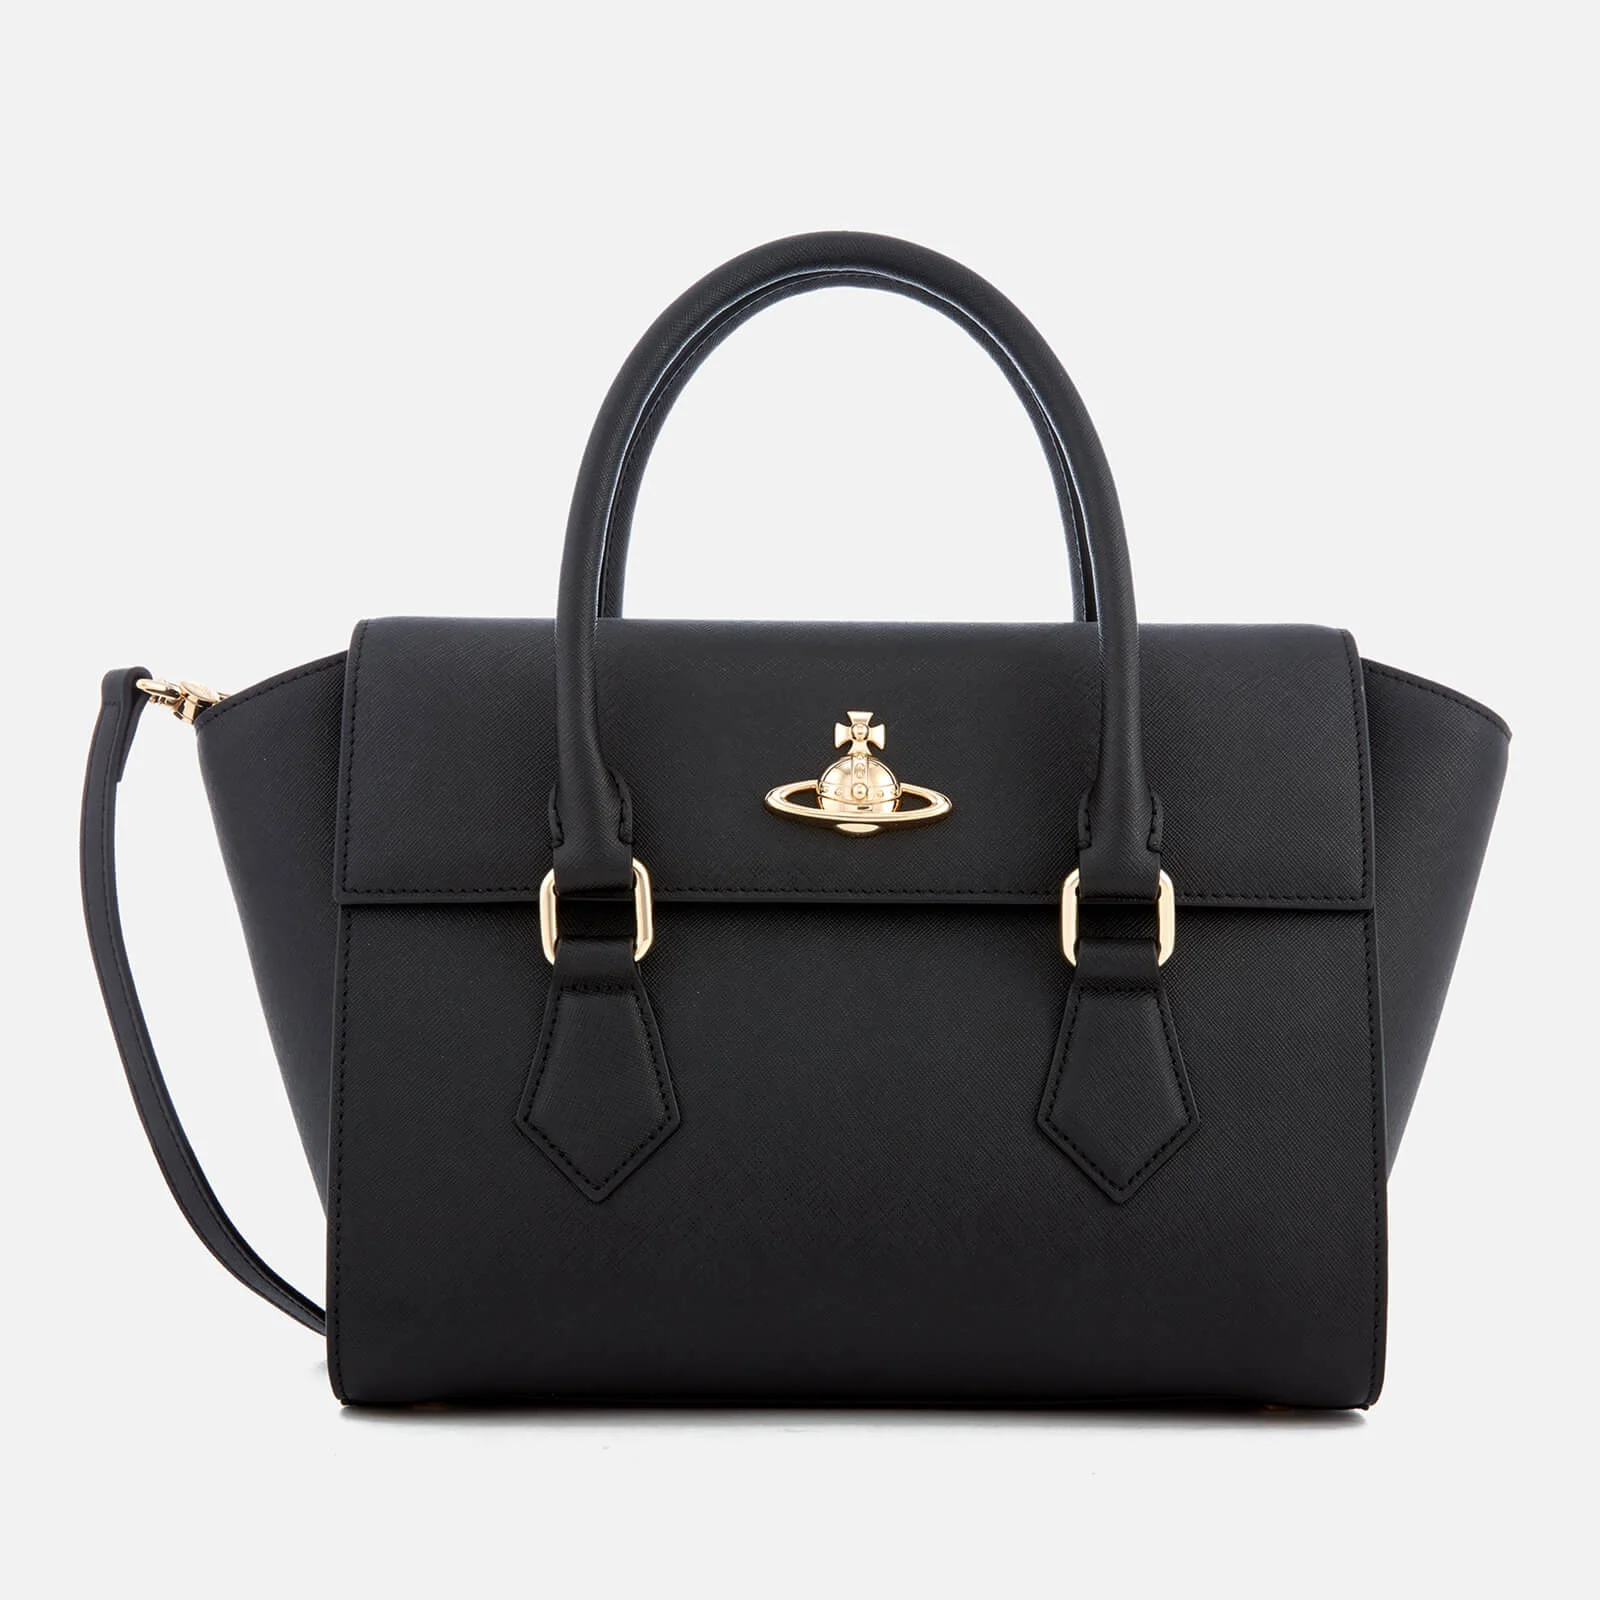 Vivienne Westwood Women's Pimlico Medium Handbag - Black Image 1